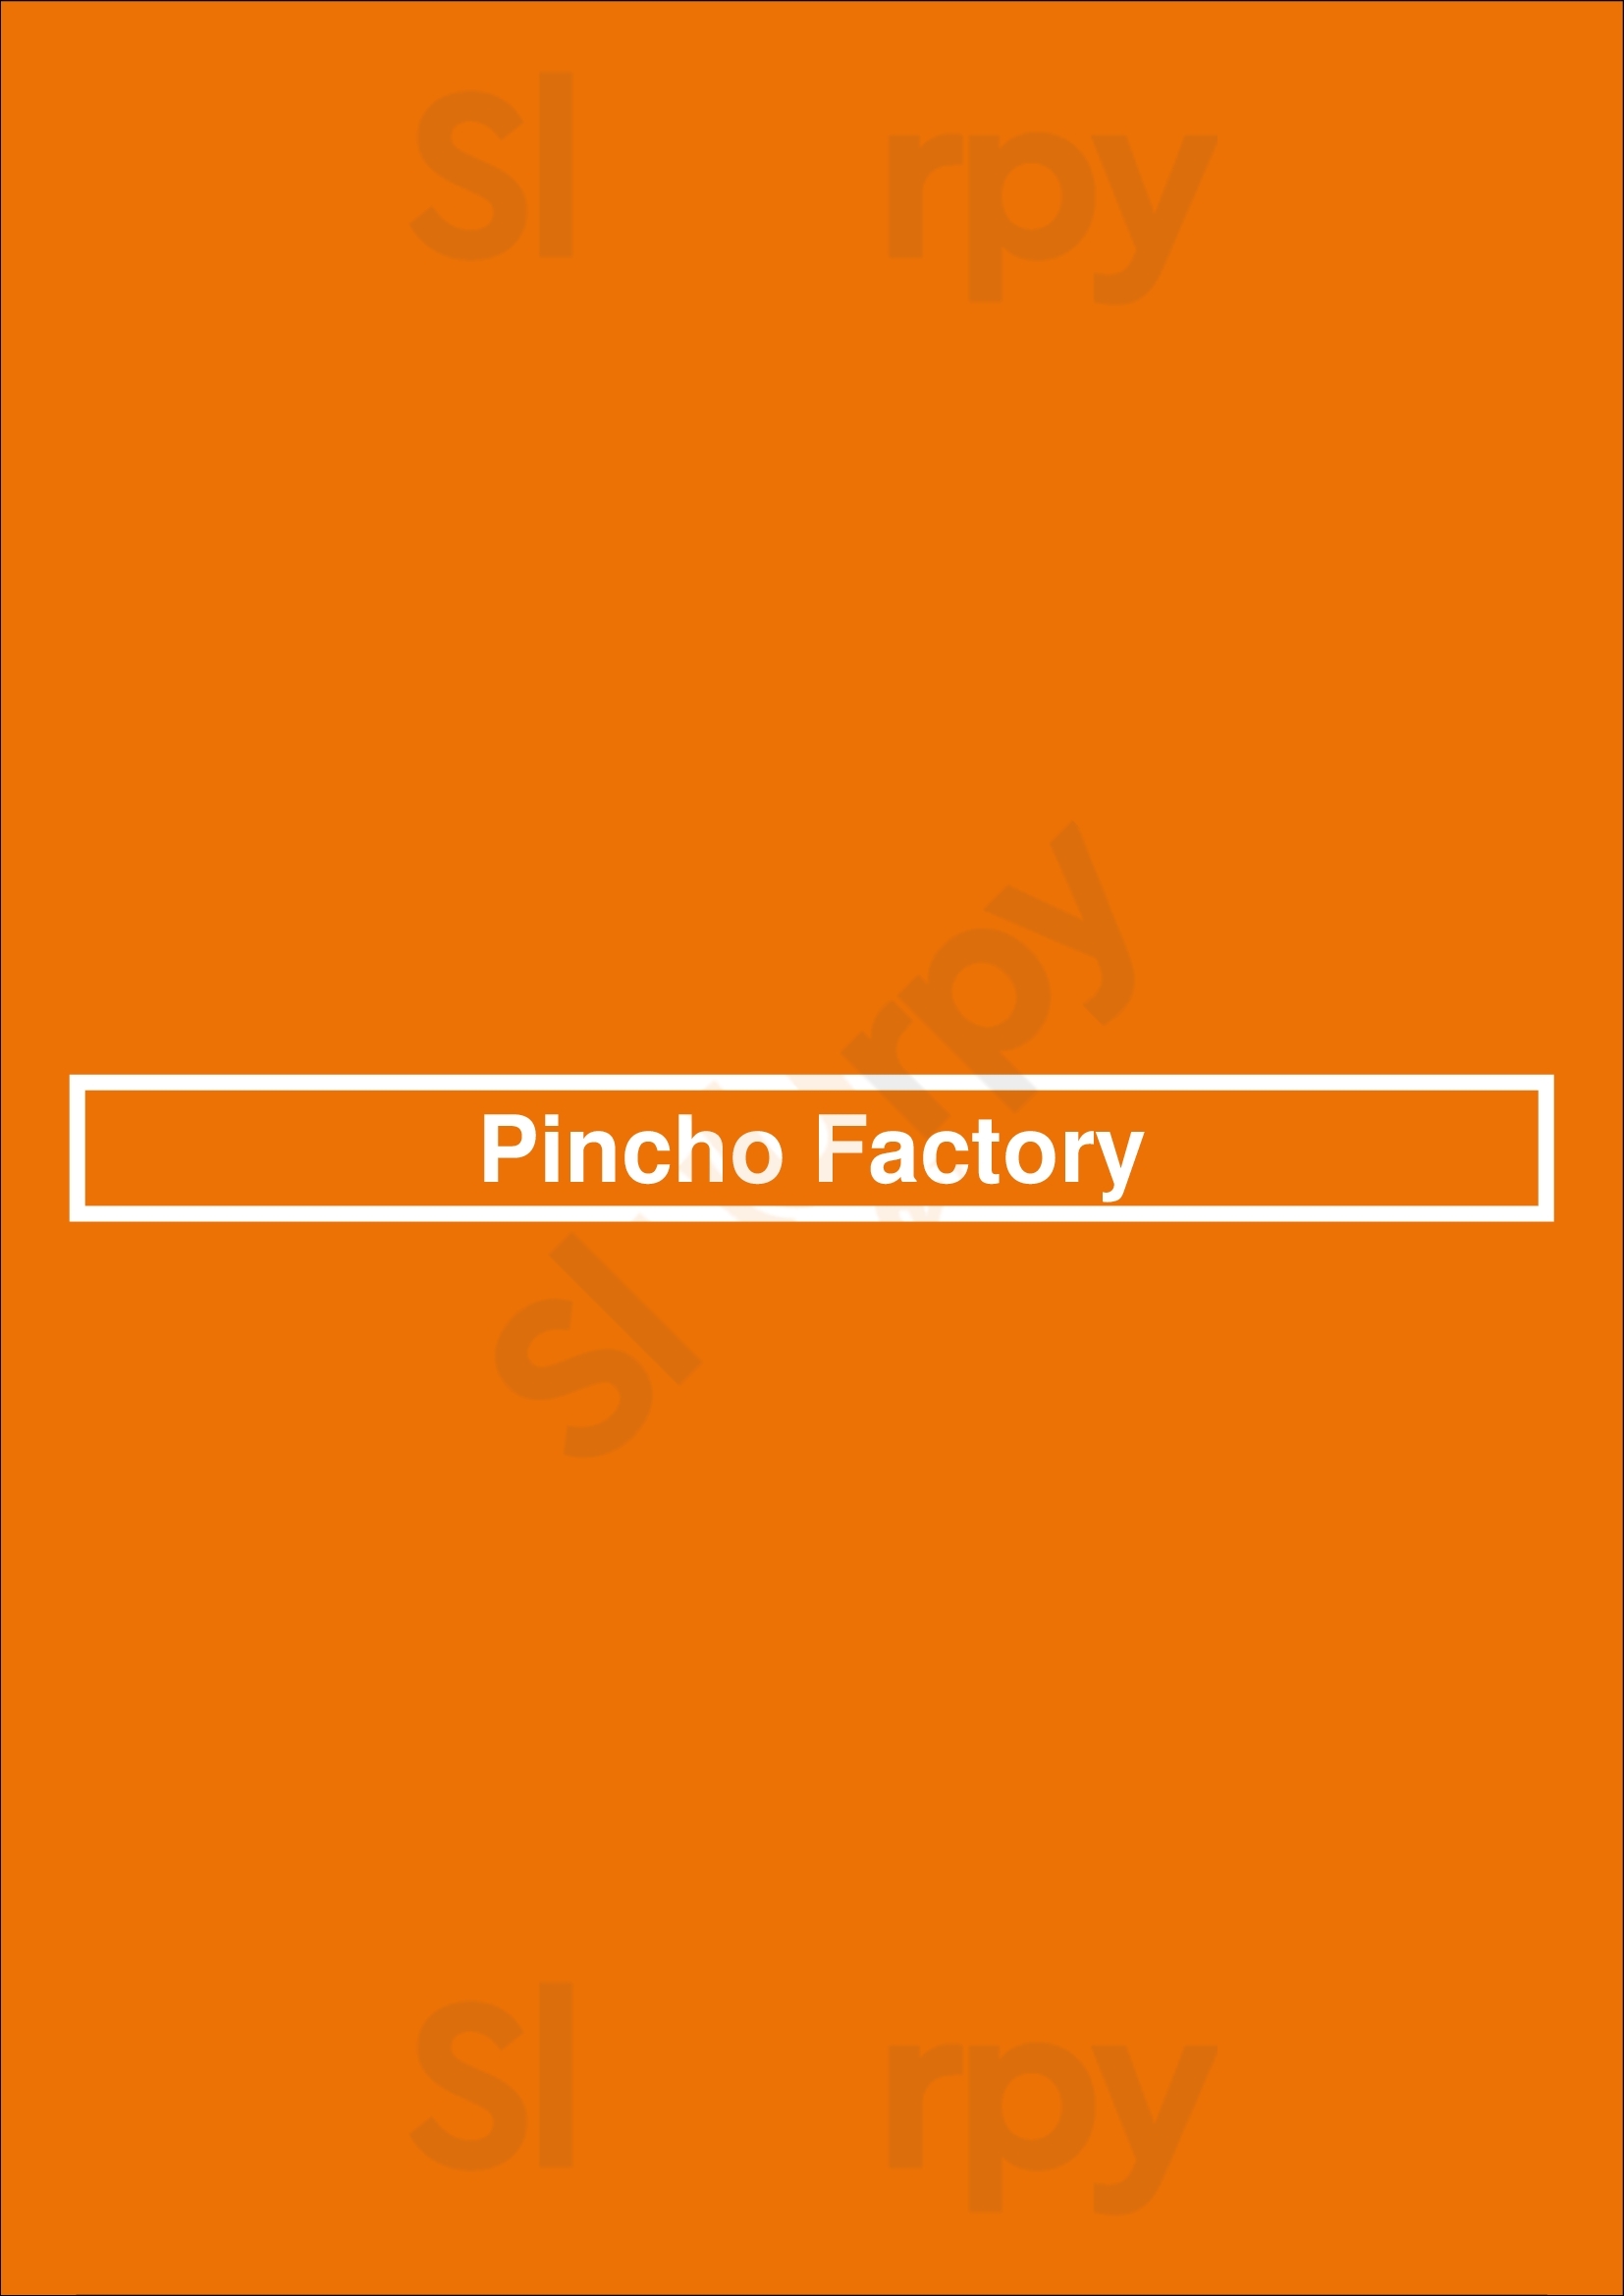 Pincho Factory Miami Menu - 1